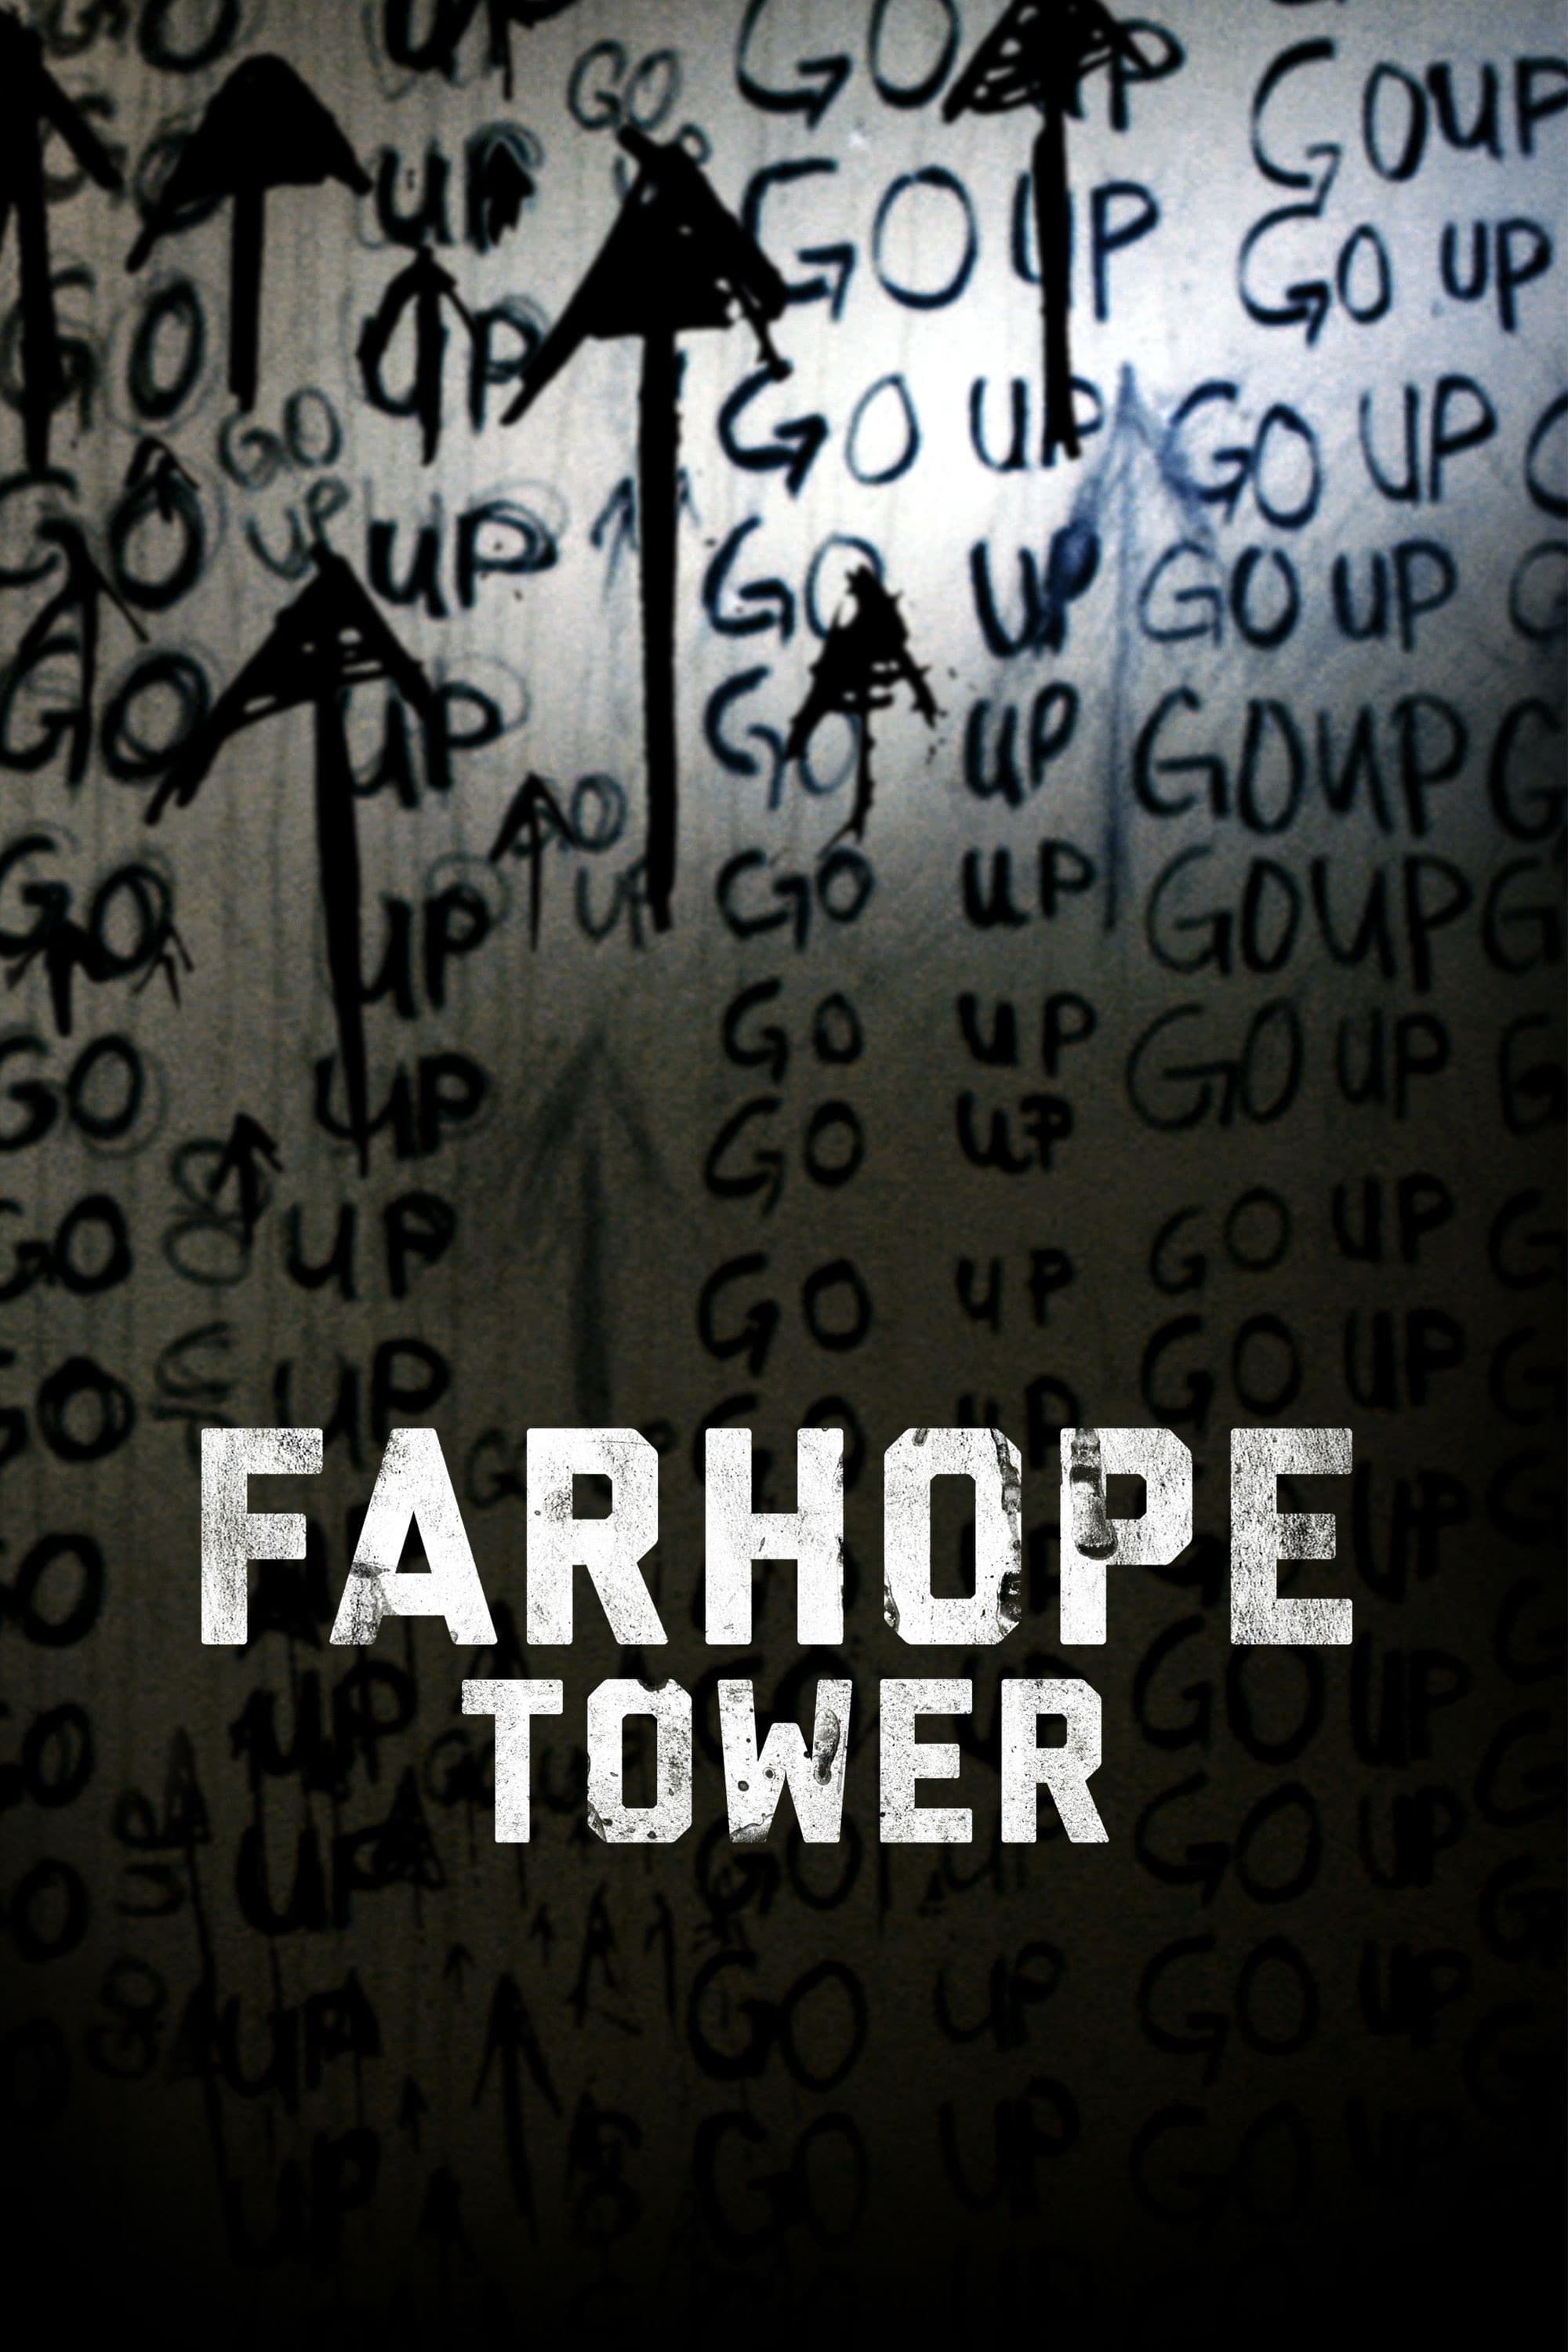 Farhope Tower (2015)